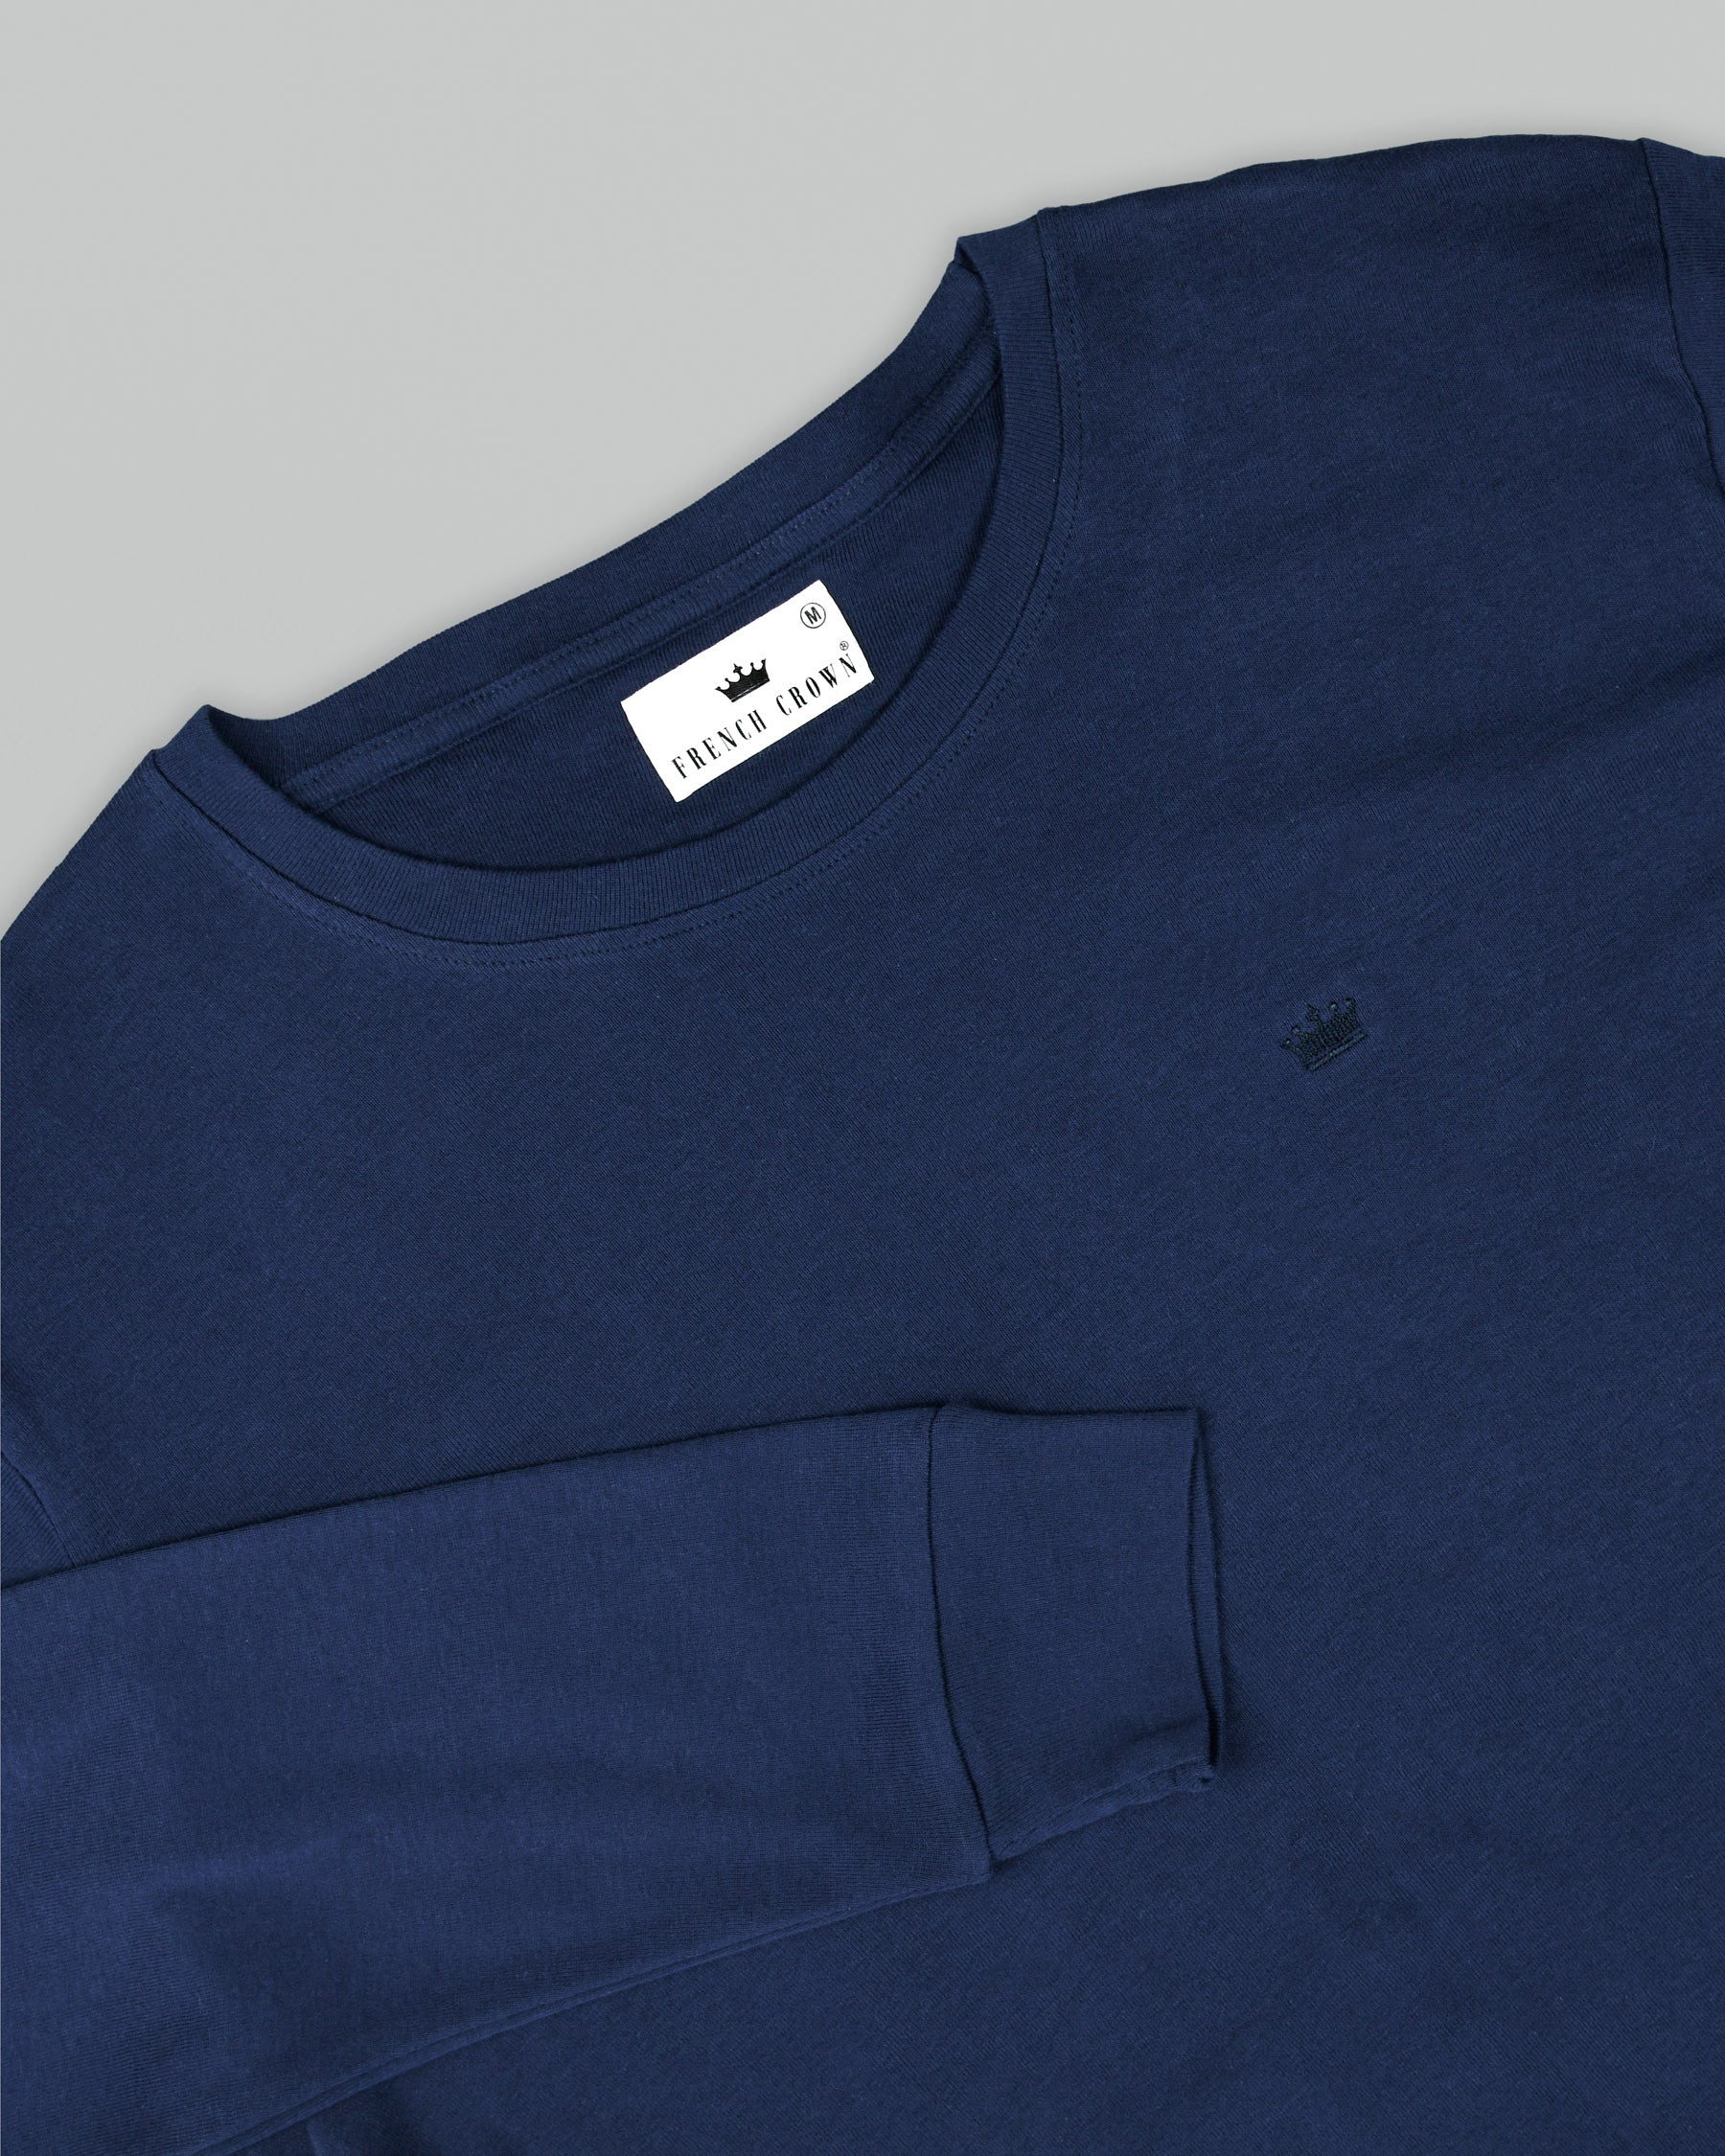 Navy Super Soft Premium Cotton Full Sleeve Organic Cotton Brushed Sweatshirt TS127-M, TS127-XXL, TS127-S, TS127-L, TS127-XL